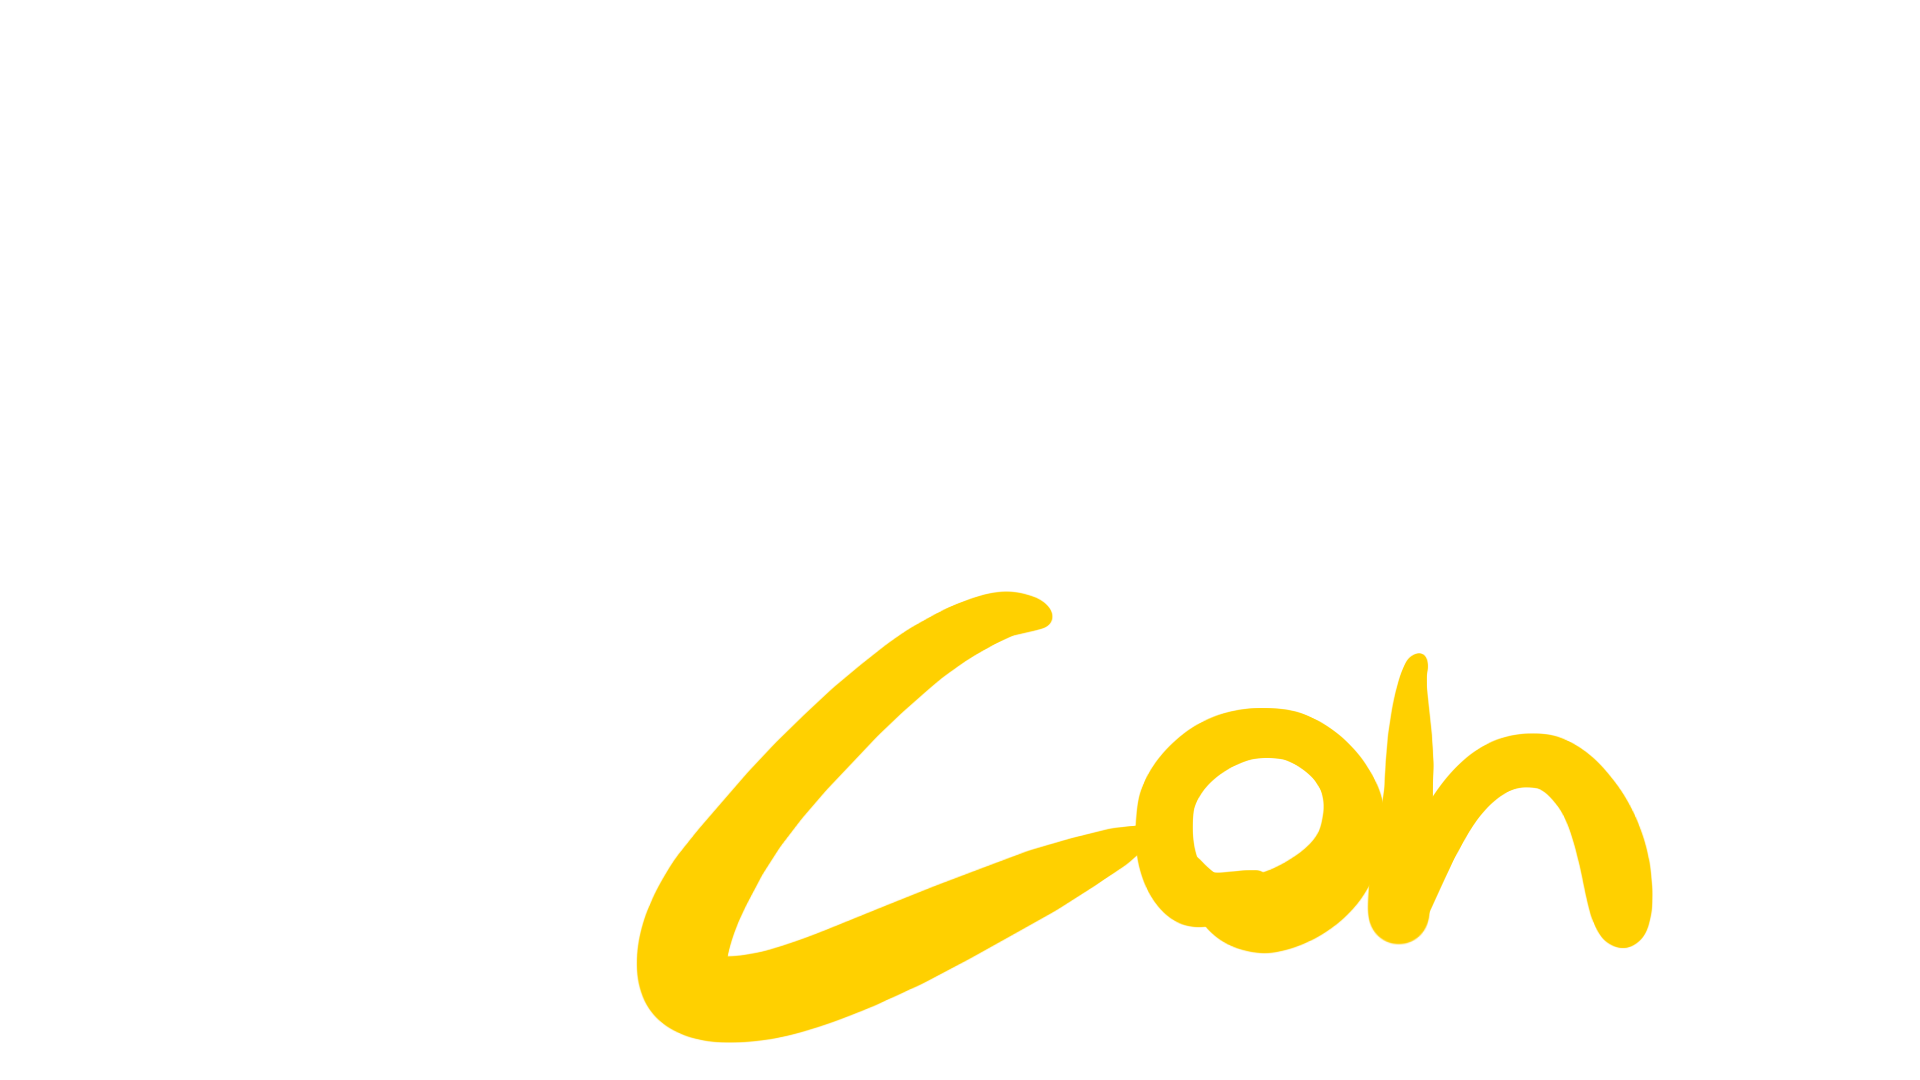 CooCooCon